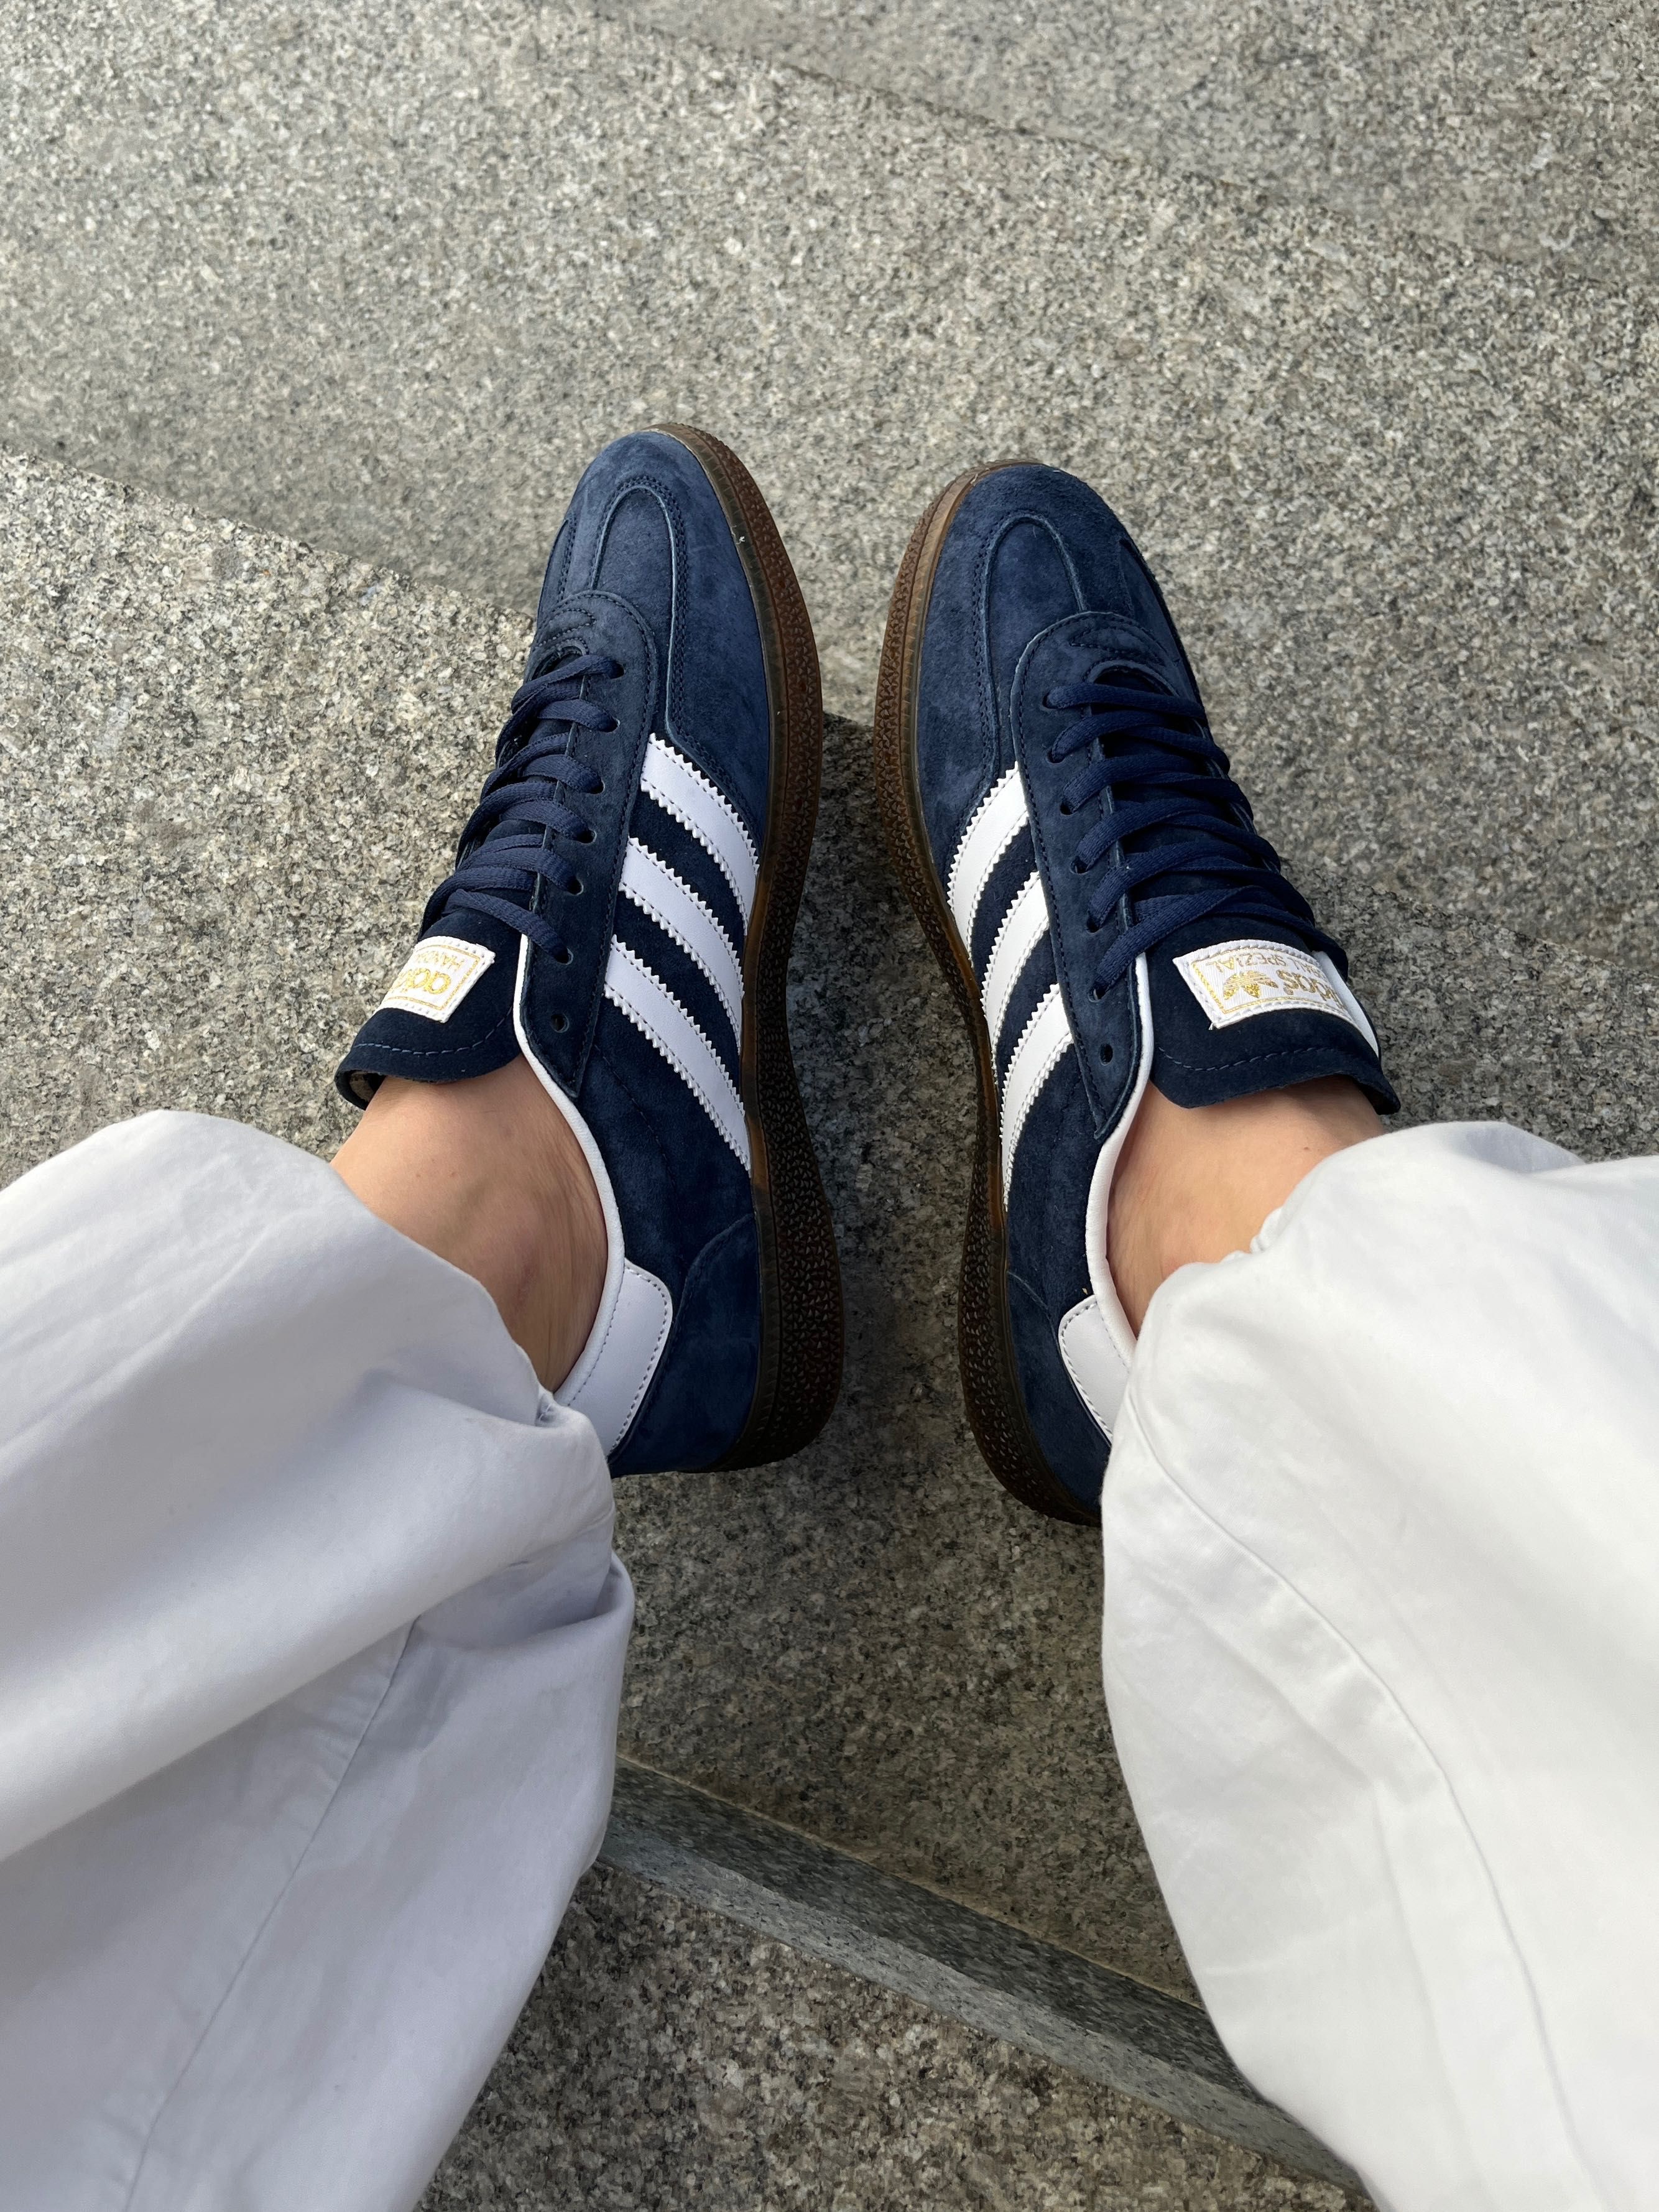 Женские кроссовки Adidas Spezial Blue/White. Размеры 36-41